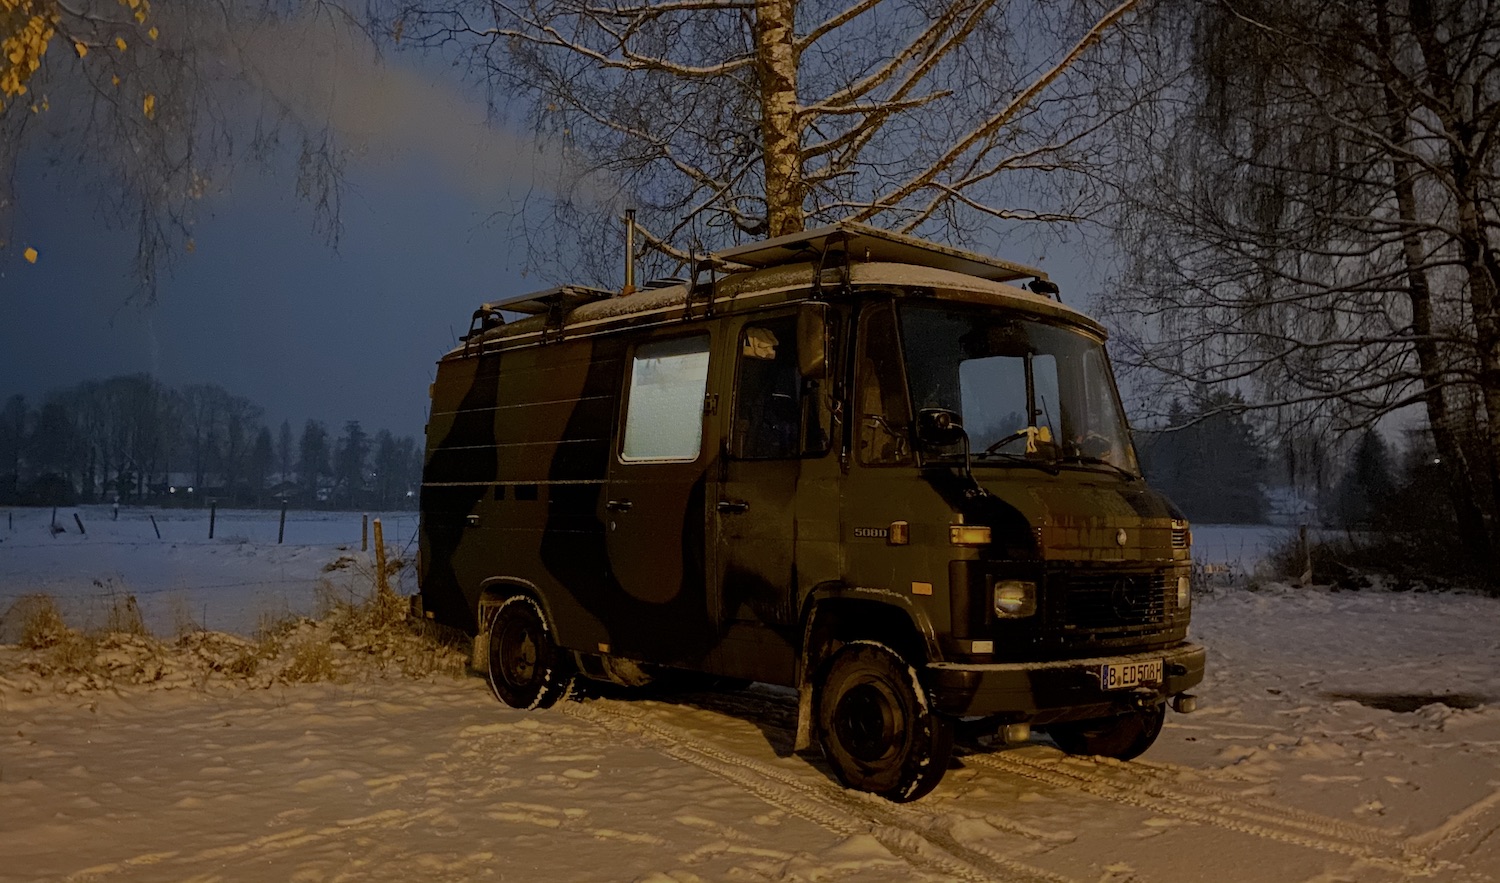 Van parked in the snow